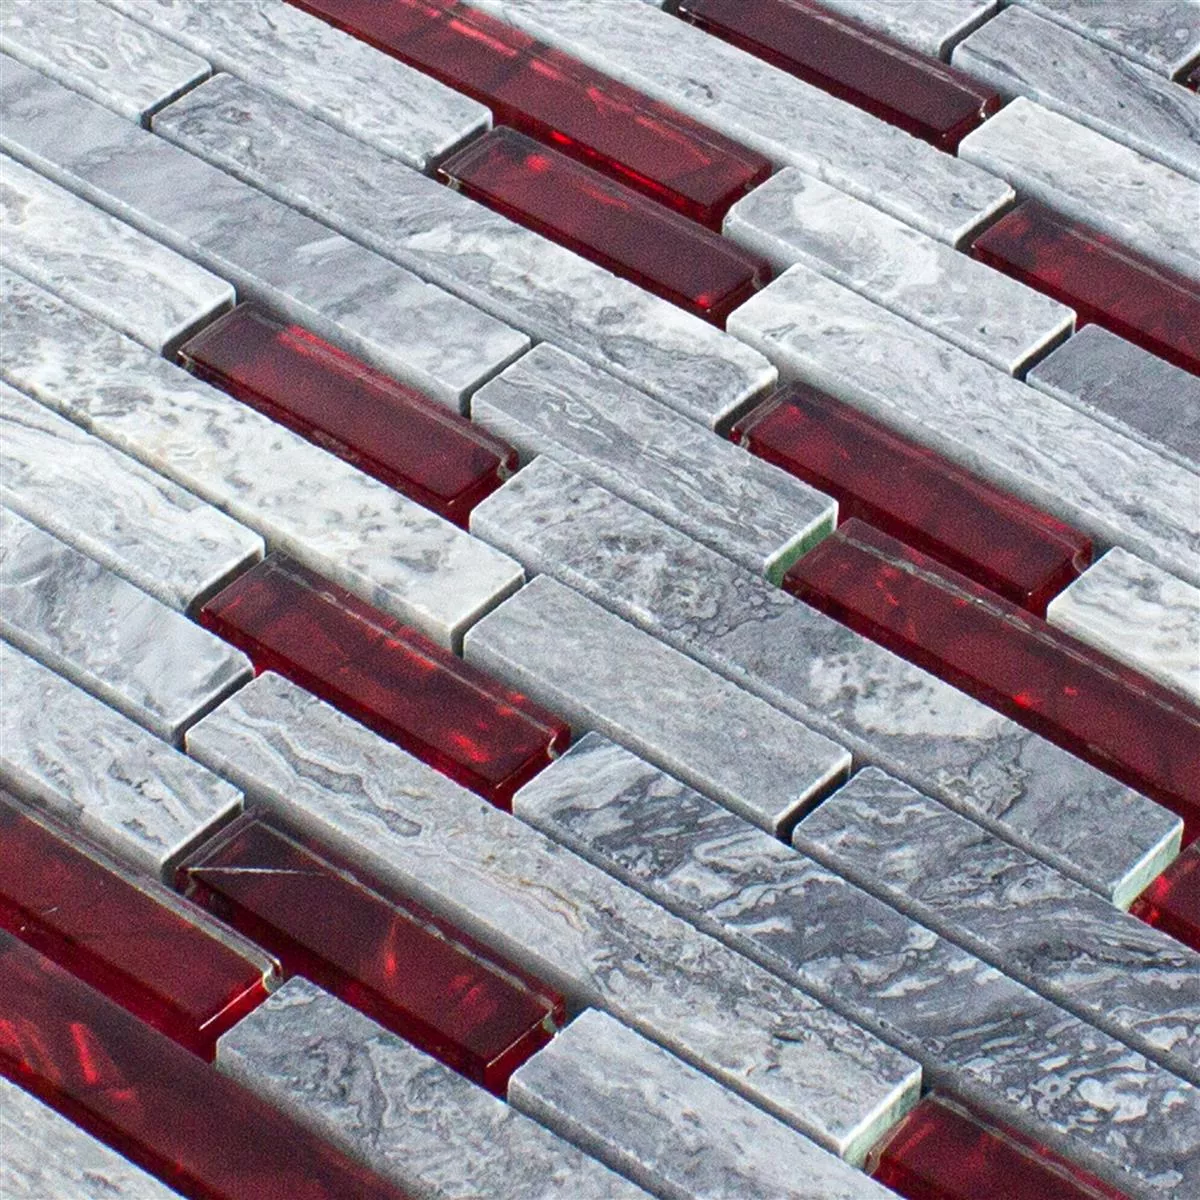 Glass Natural Stone Mosaic Tiles Sinop Grey Red Brick